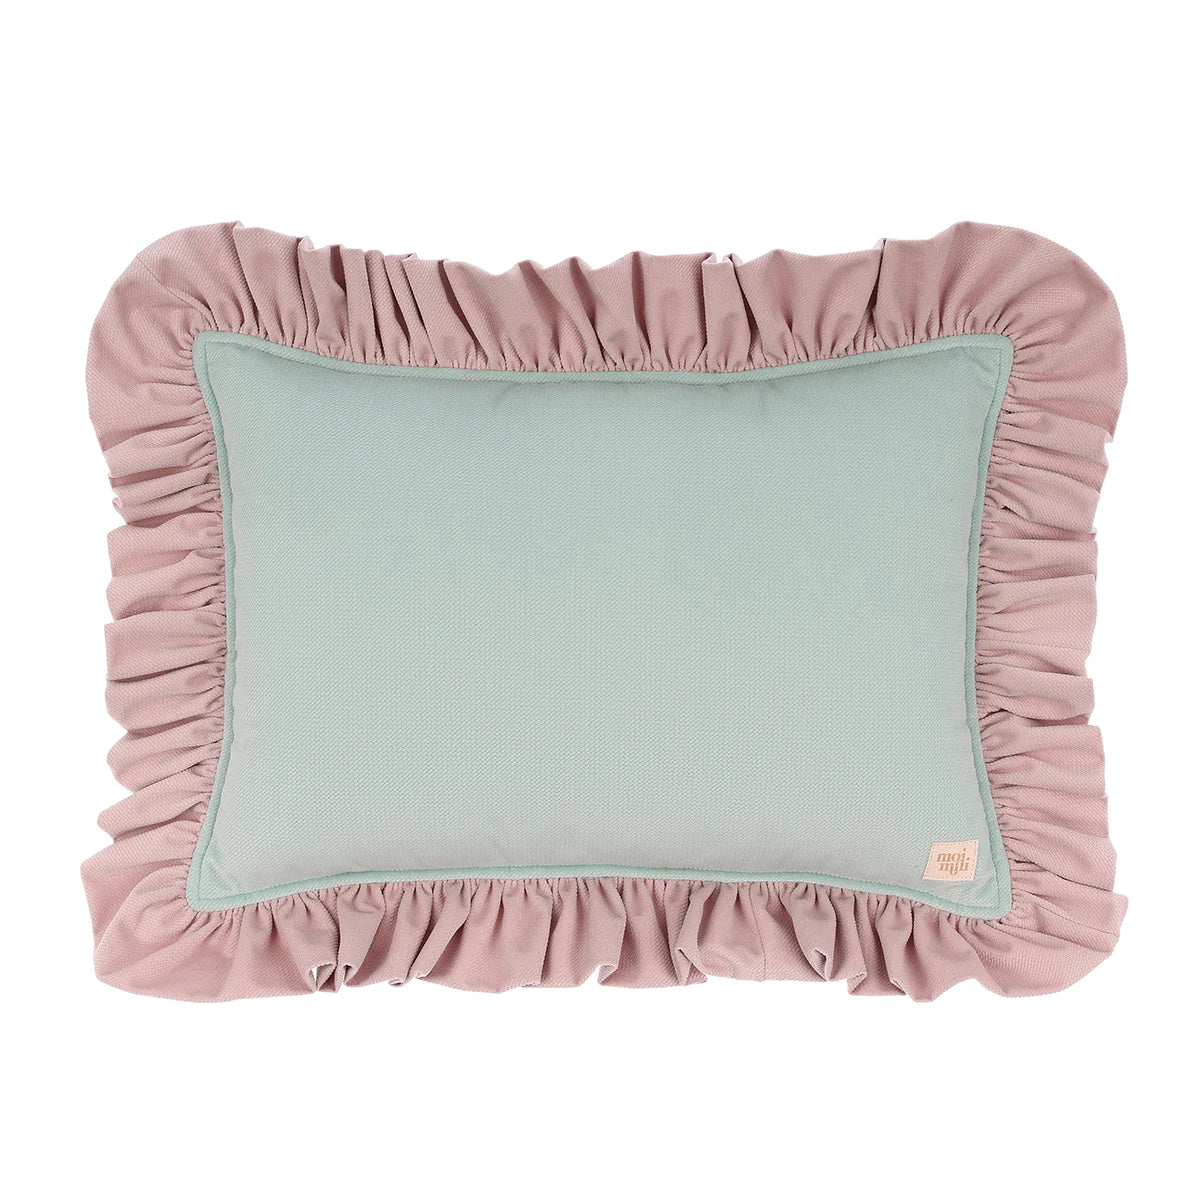 "Strawberry matcha" Soft Velvet Pillow with Frill